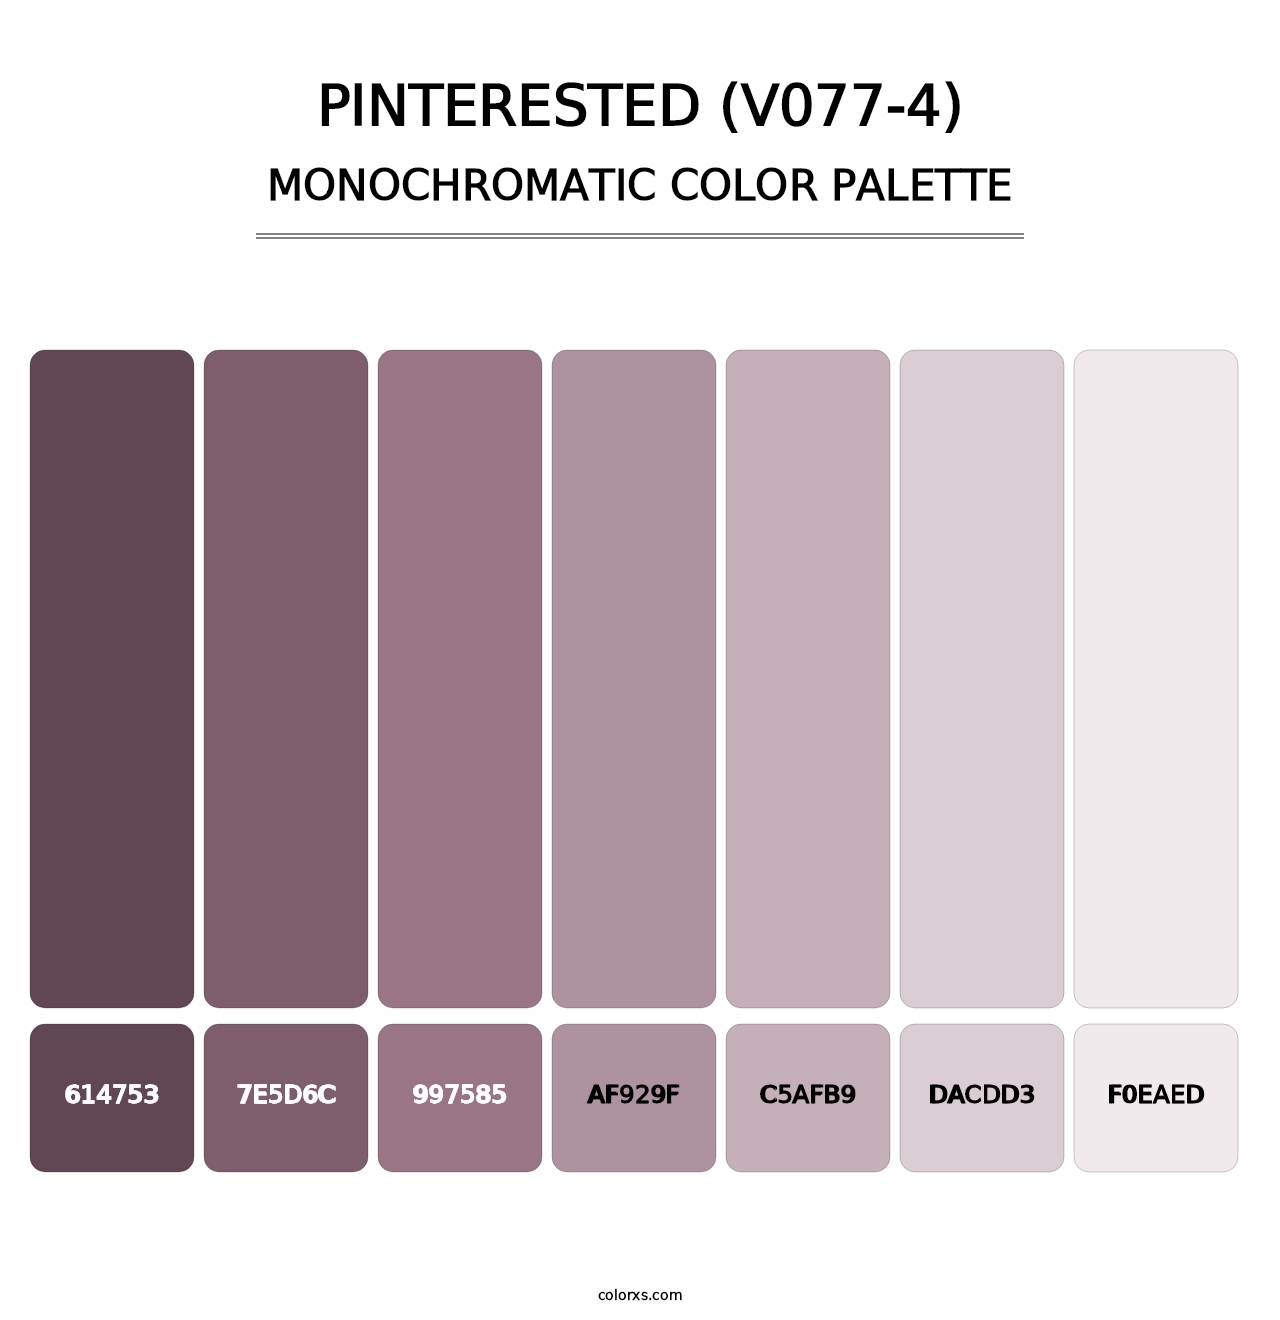 Pinterested (V077-4) - Monochromatic Color Palette